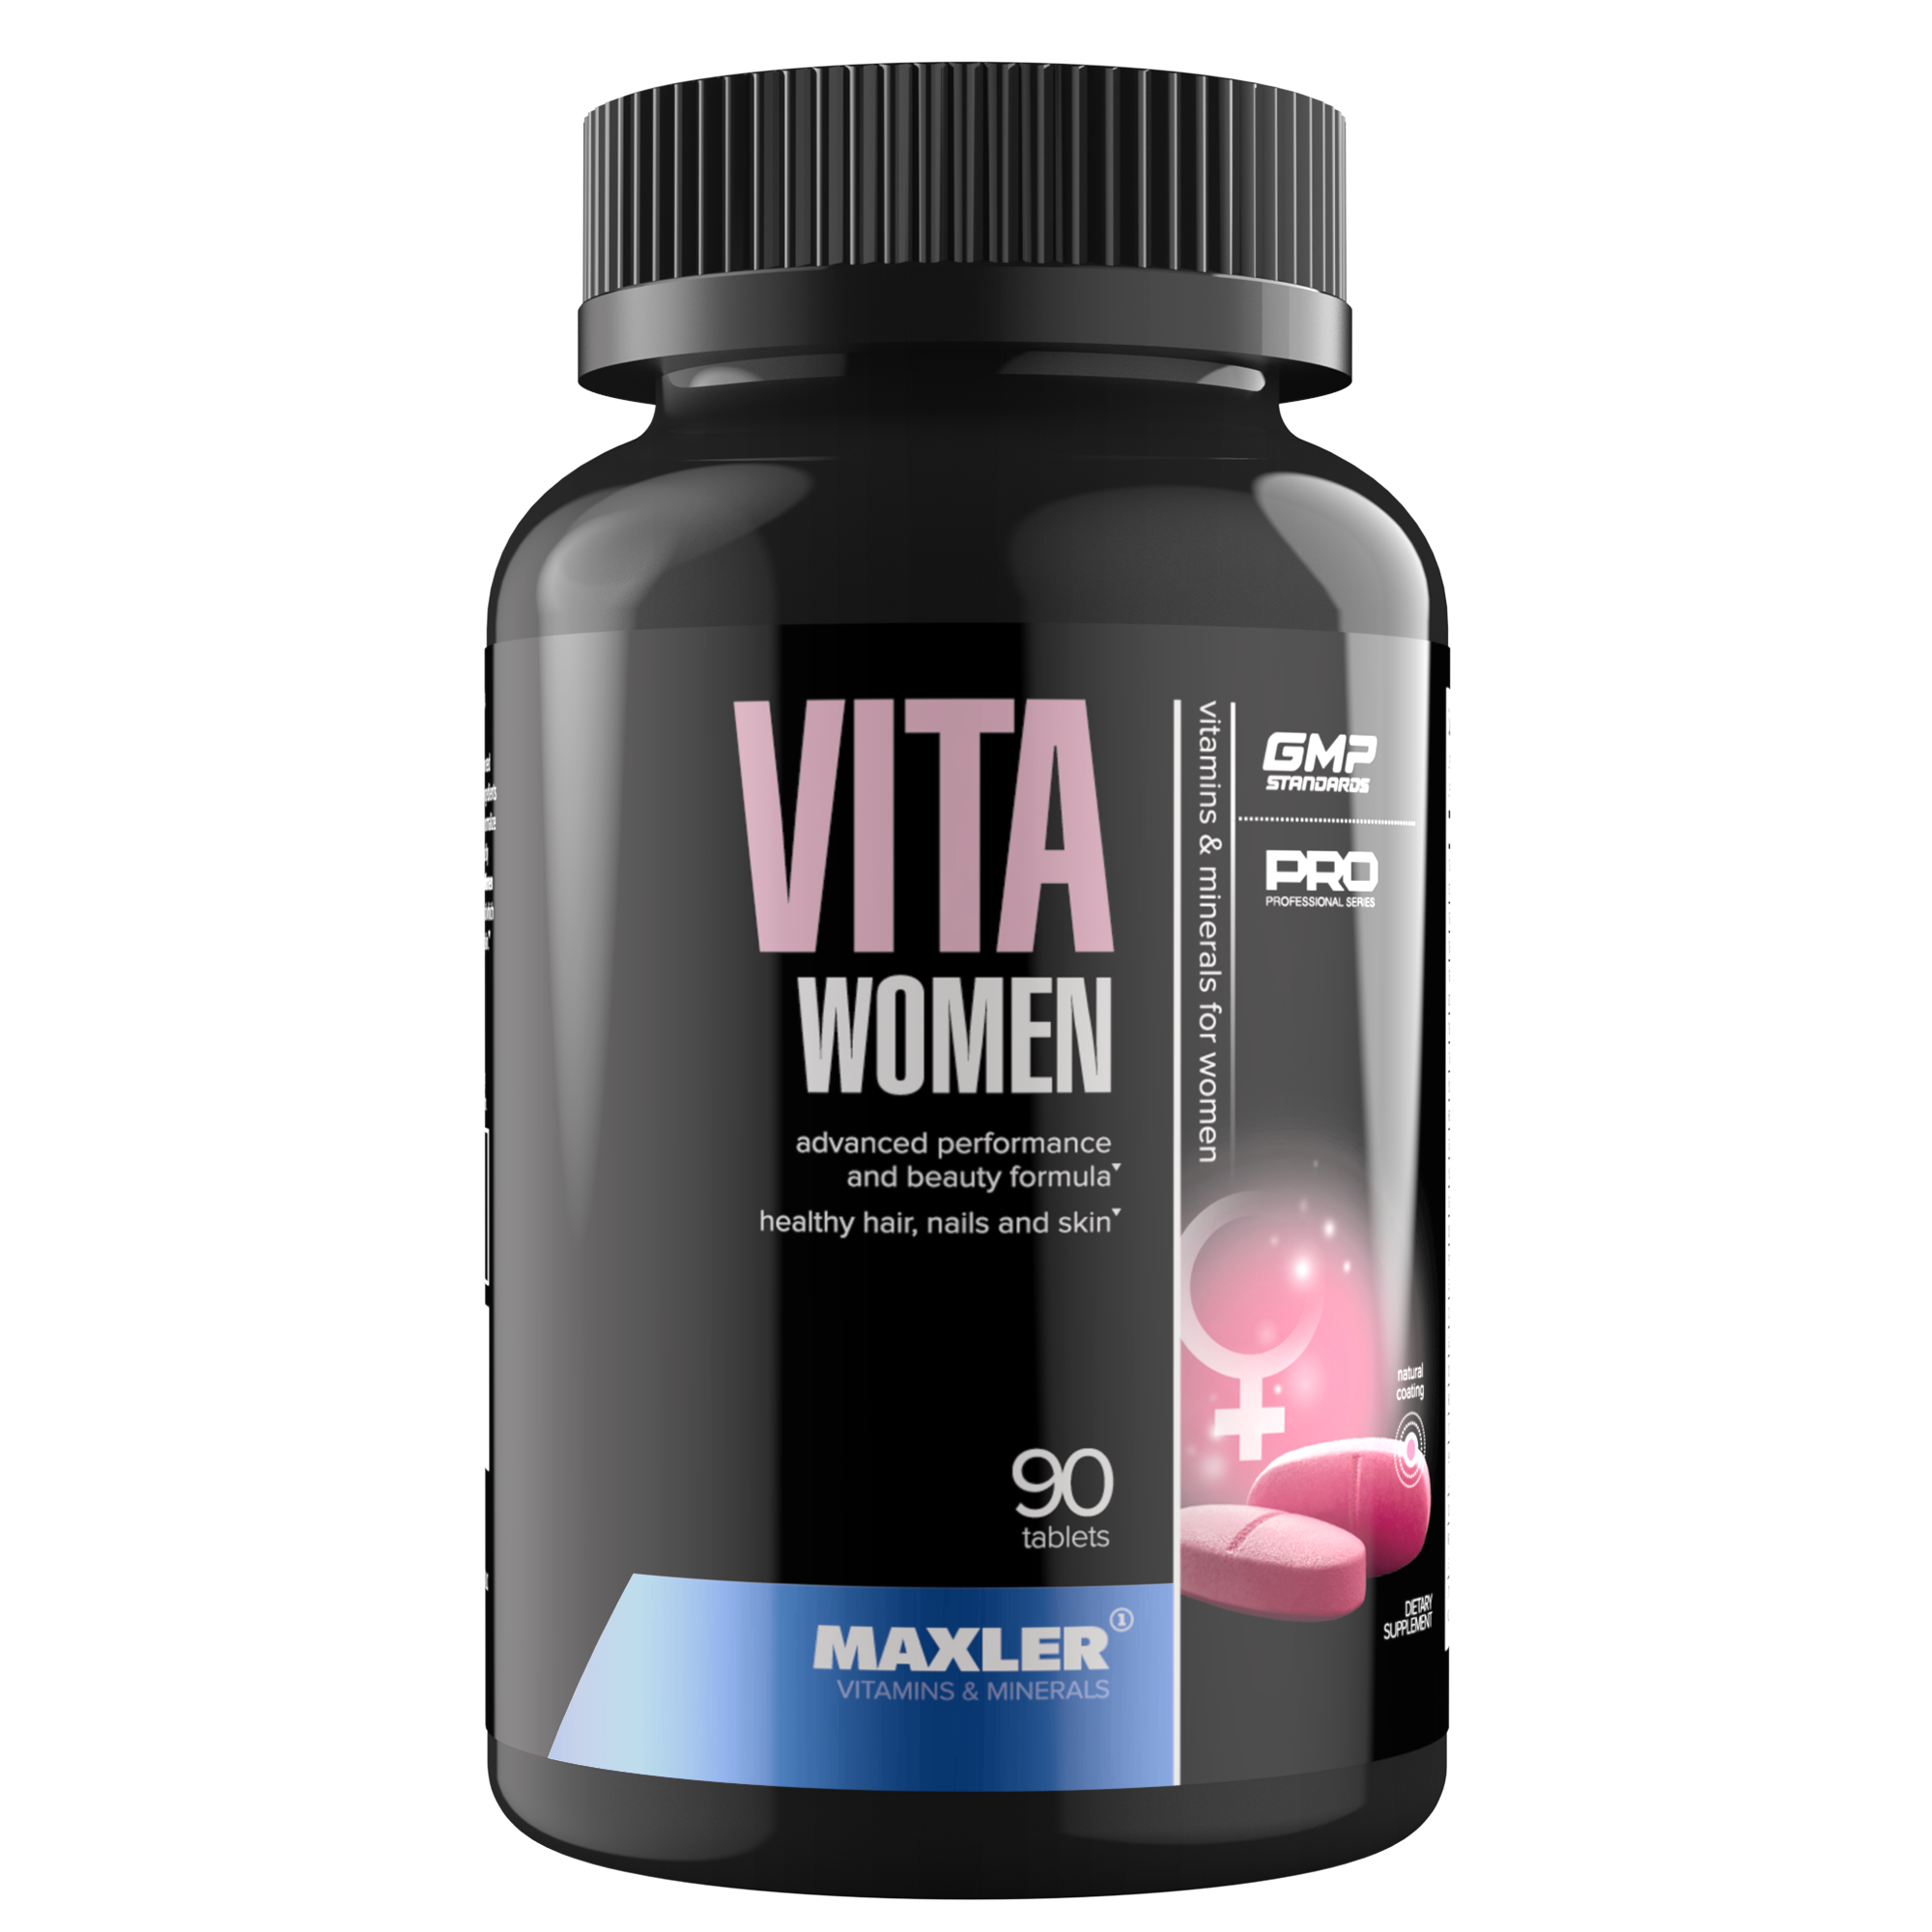 Макслер витамины для мужчин. Maxler VITAMEN 180 таб. Vita women (90 таб), Maxler. Витамины - Maxler VITAWOMEN (90 табл.).